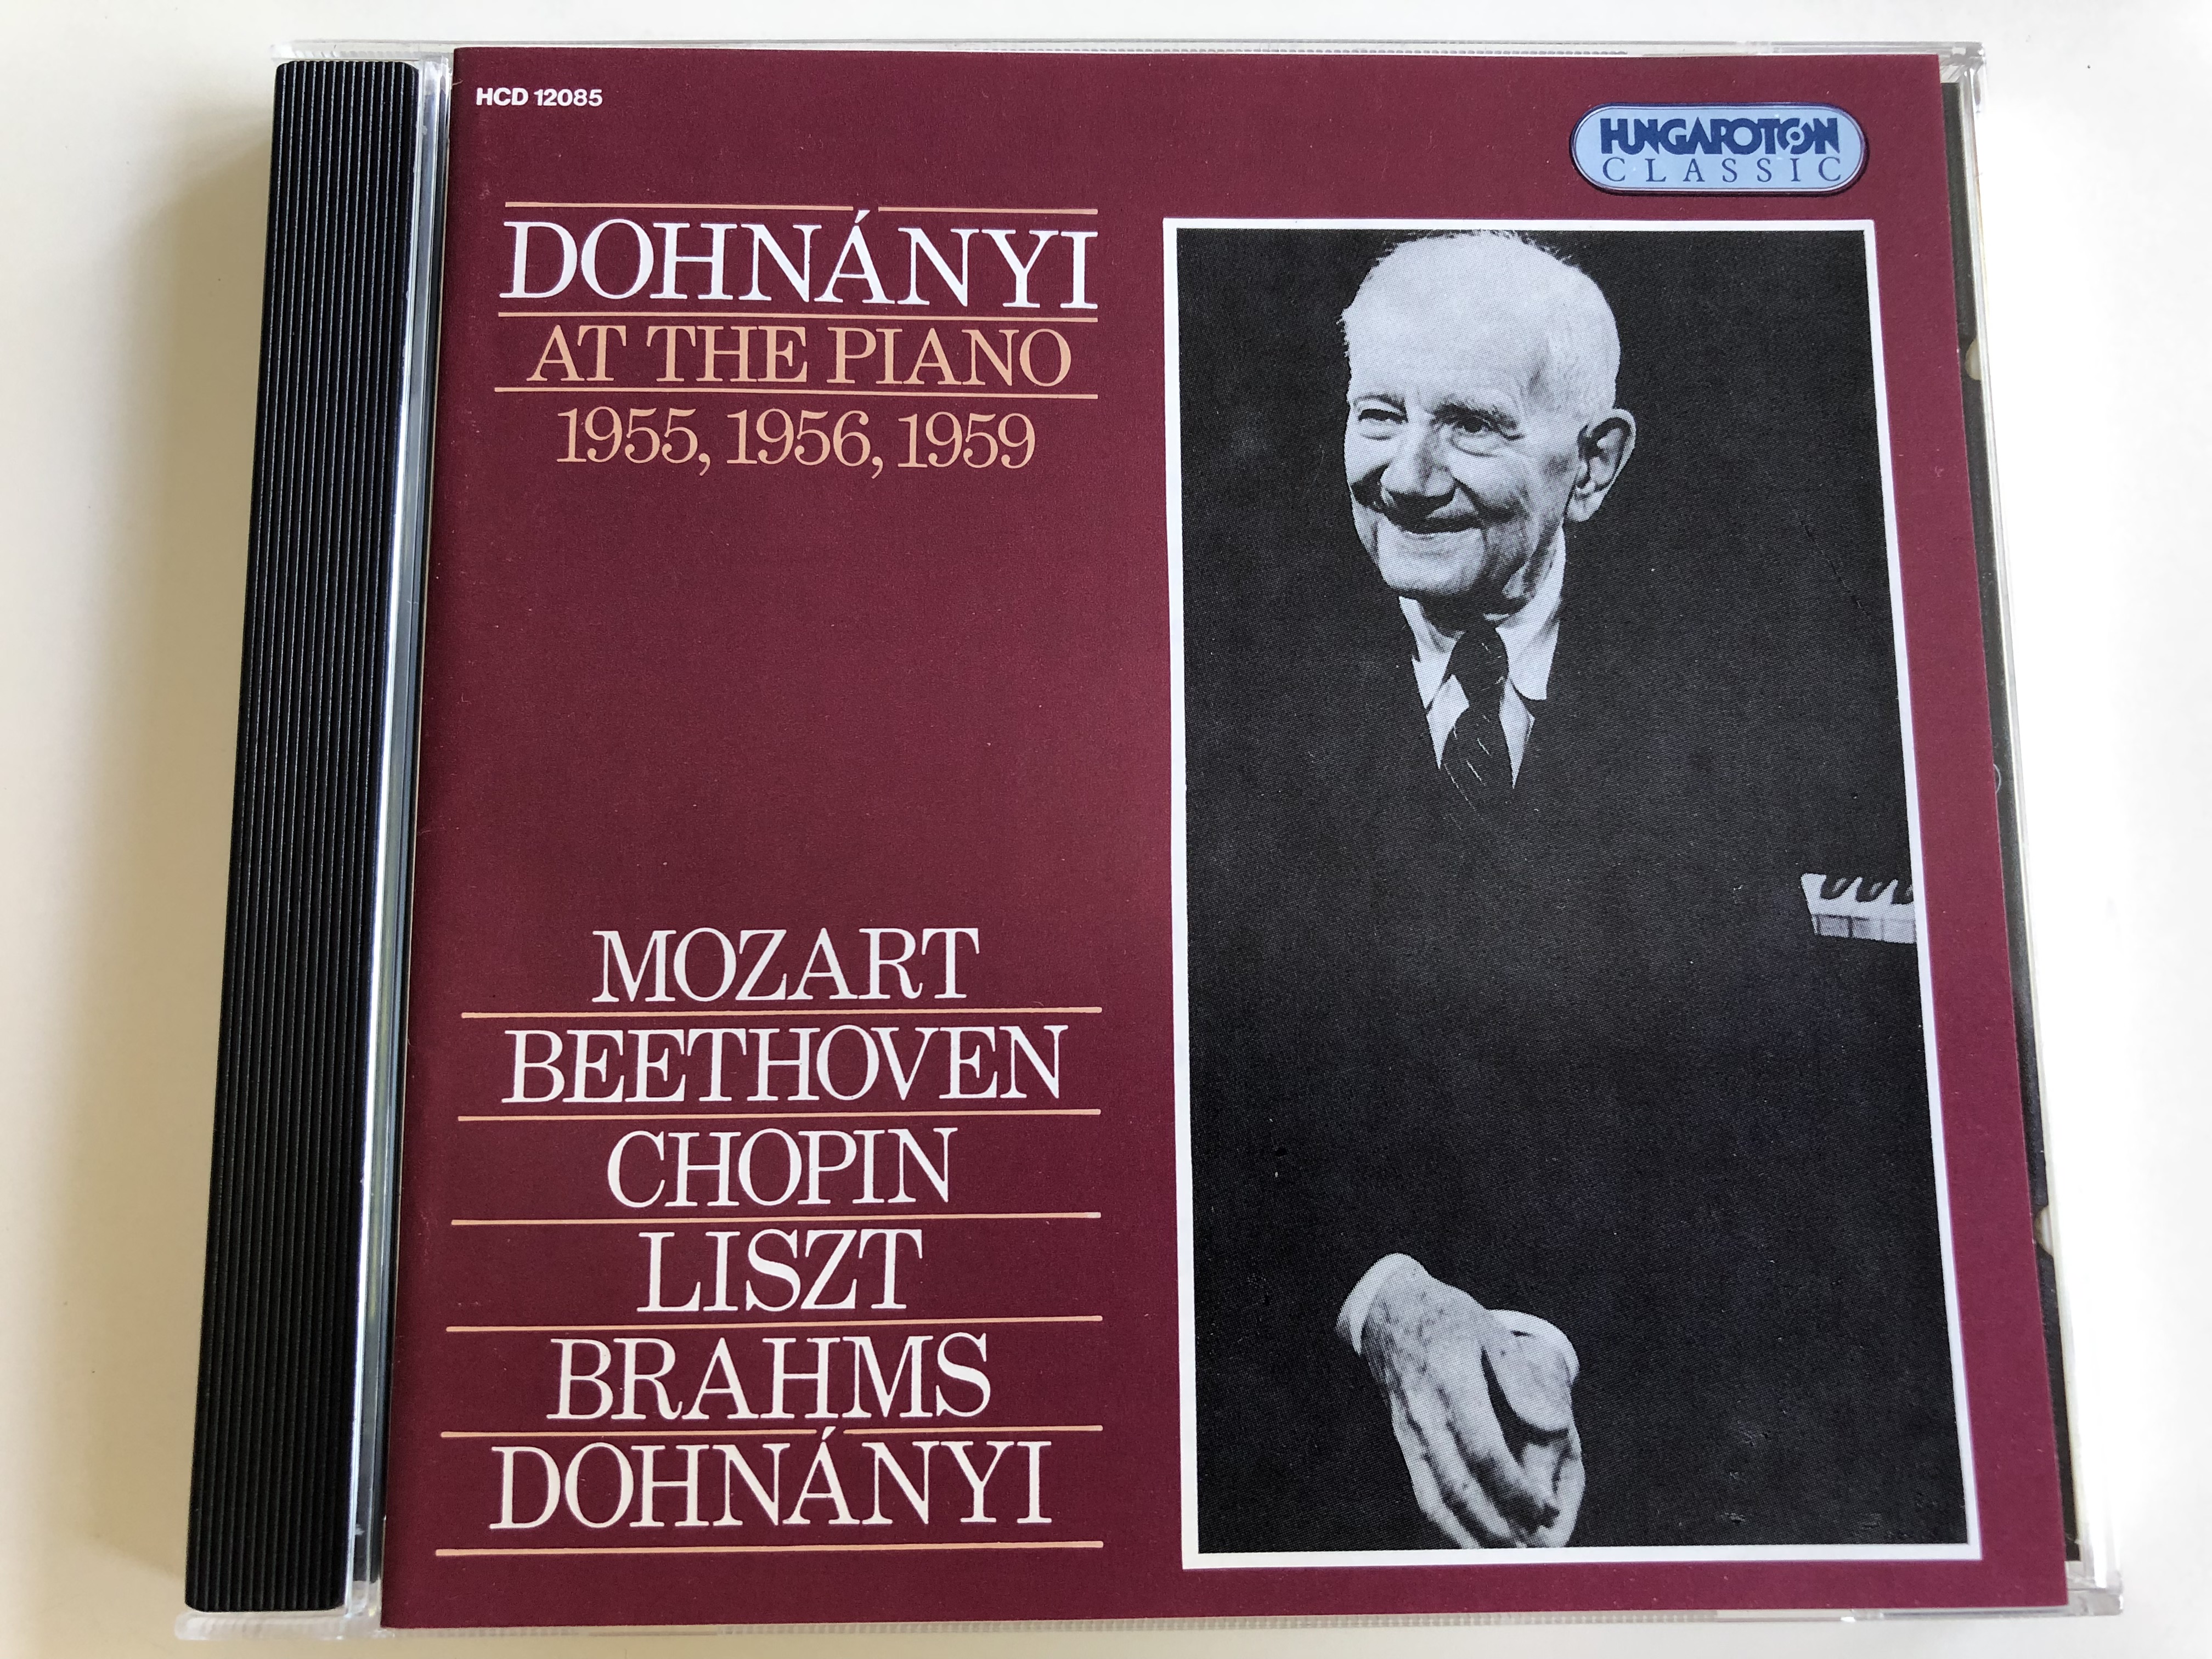 dohn-nyi-at-the-piano-1955-1956-1959-mozart-beethoven-chopin-liszt-brahms-dohn-nyi-hungaroton-classic-audio-cd-1993-hcd-12085-1-.jpg